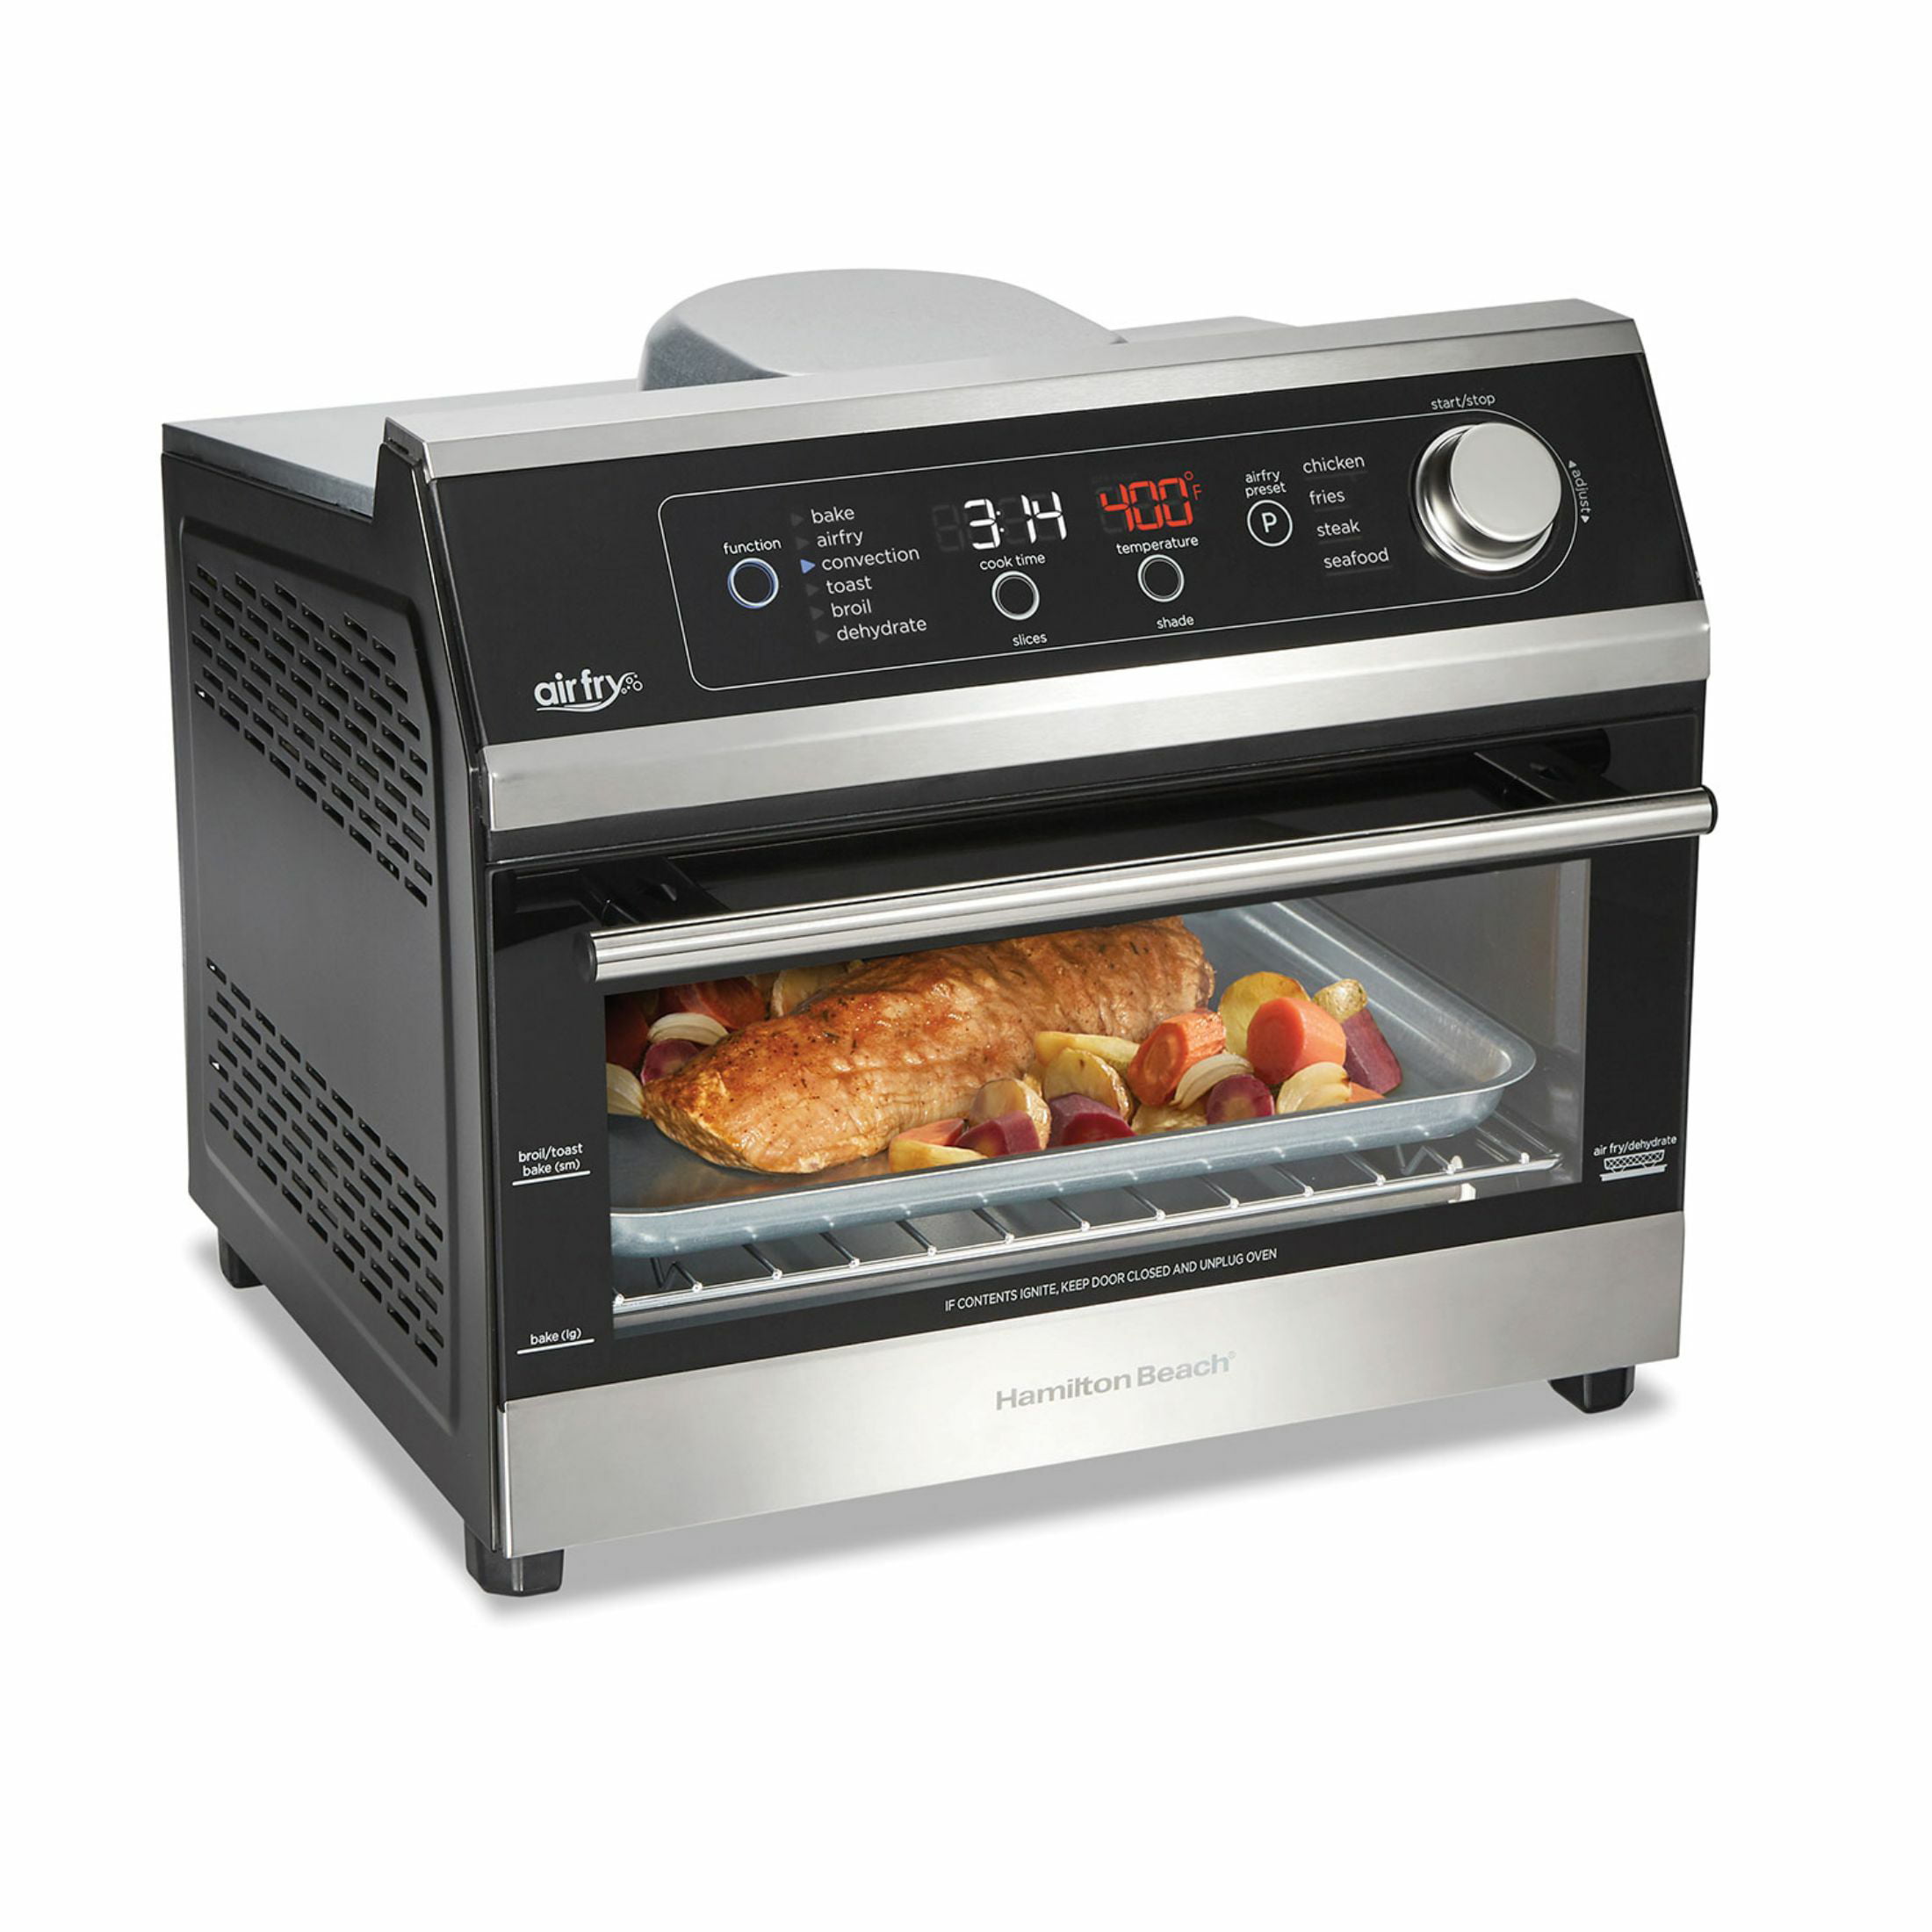 Hamilton Beach Digital Air Fryer Toaster Oven 6 Slice Capacity - Black,  Stainless Steel